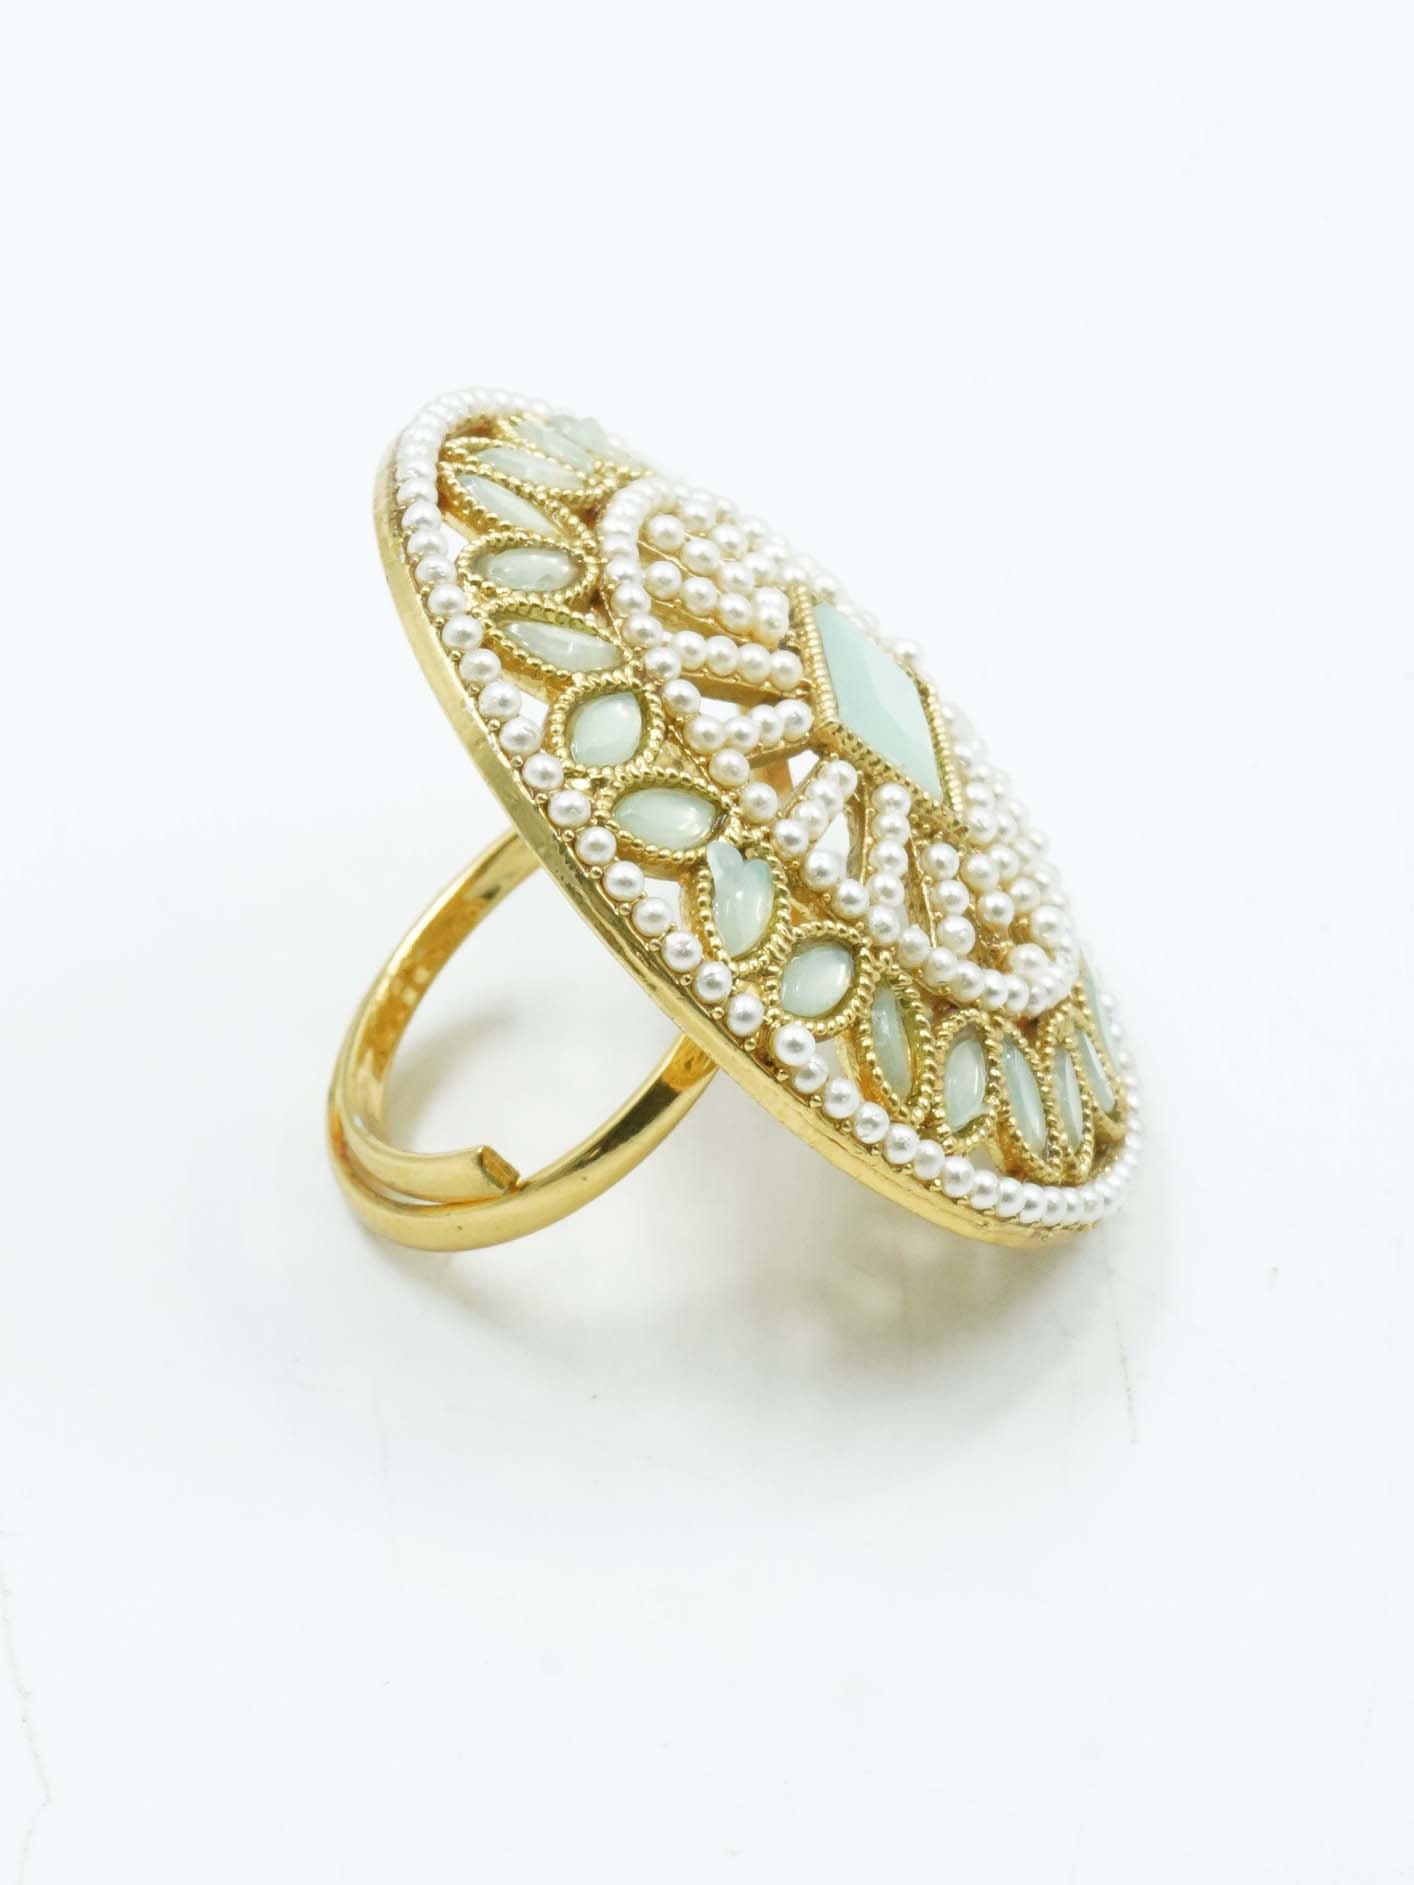 Antique Gold Plated Adjustable Size Designer Finger ring with Stones 10929N